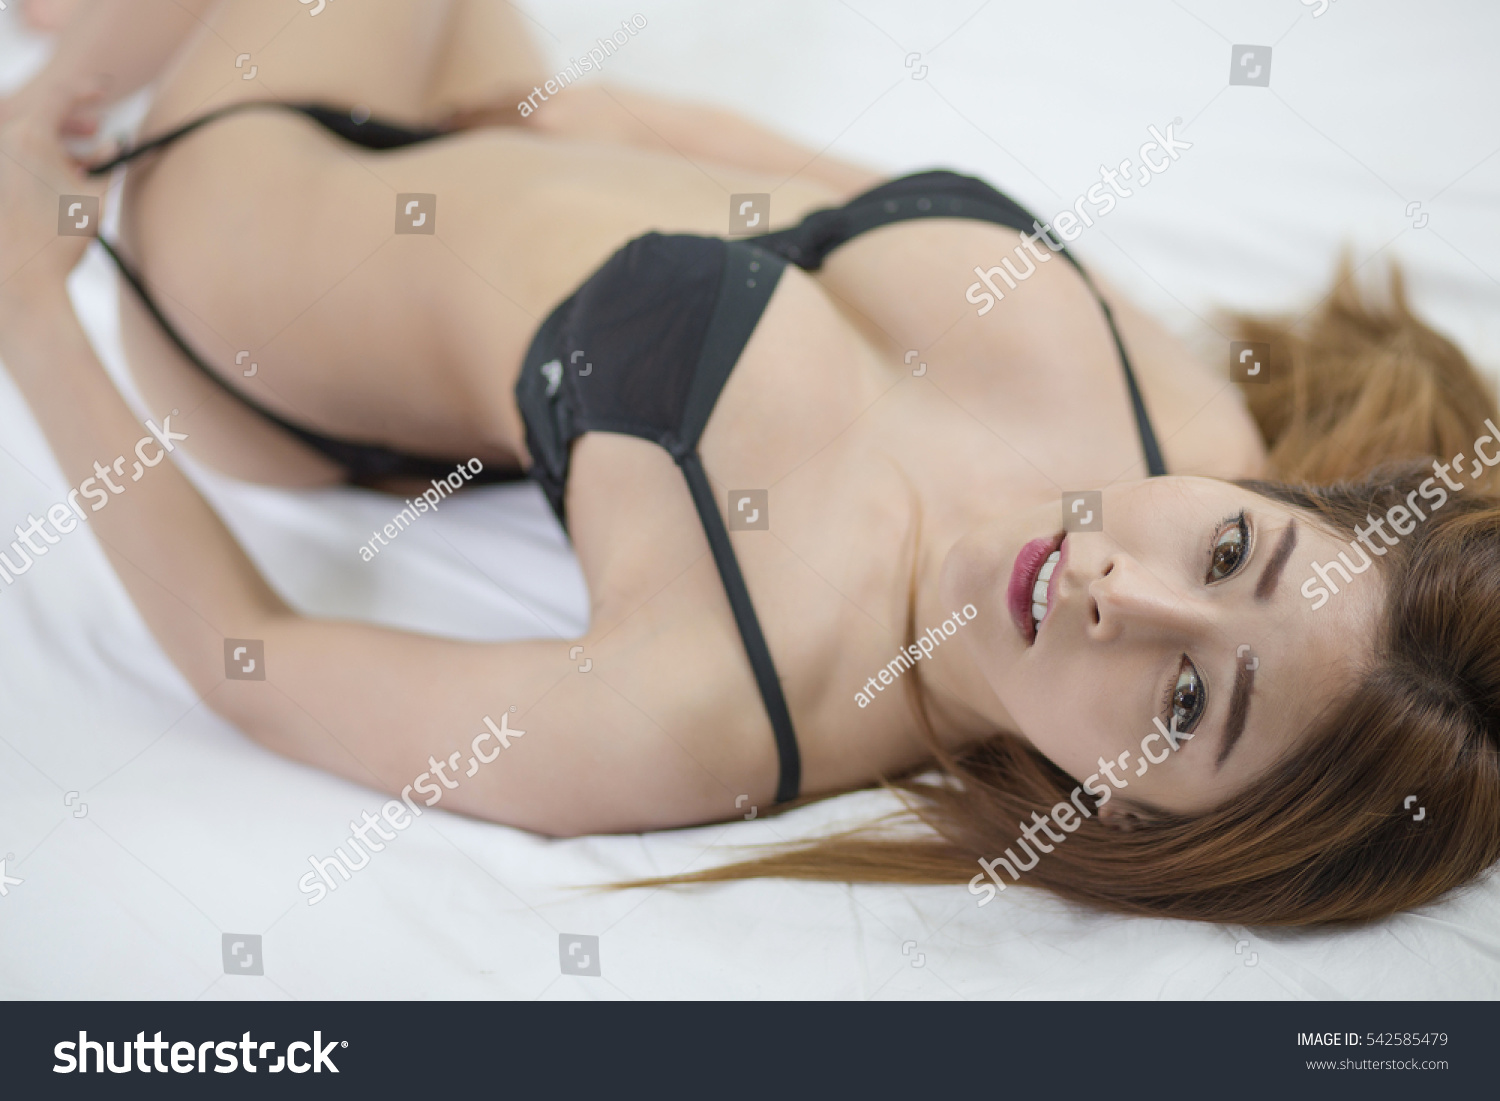 Sexy Asian Woman Lingerie Thong Lying